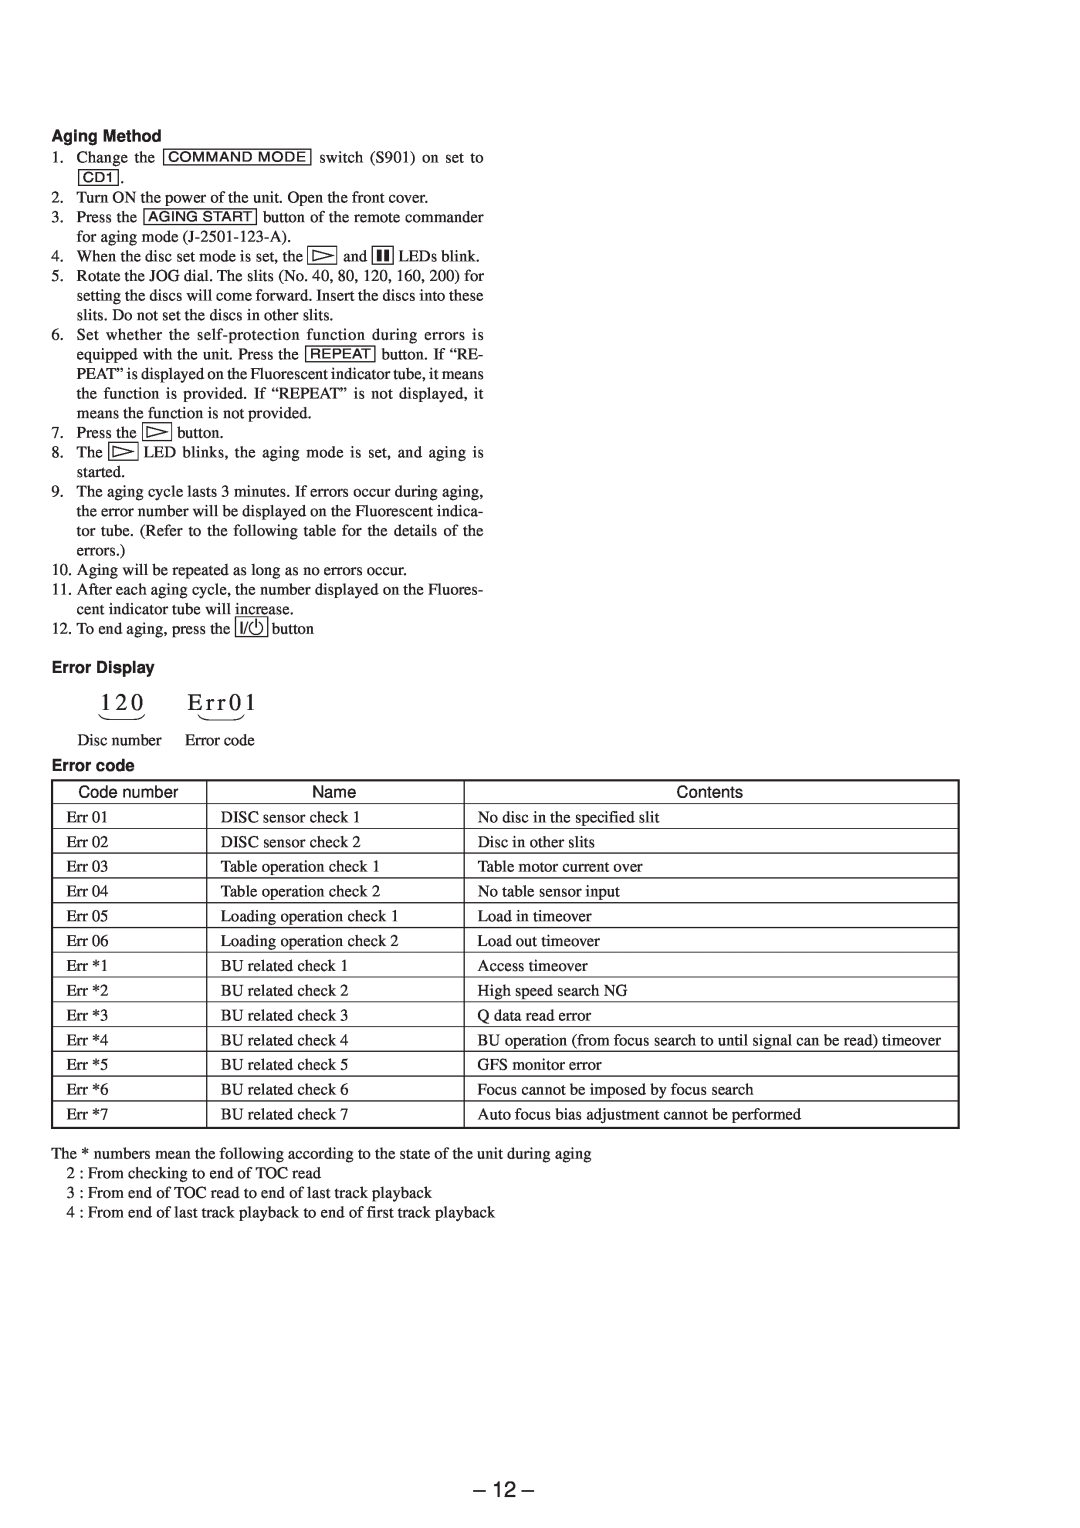 Sony Ericsson CDP-CX220 service manual E r r, Aging Method, Error Display, Error code 